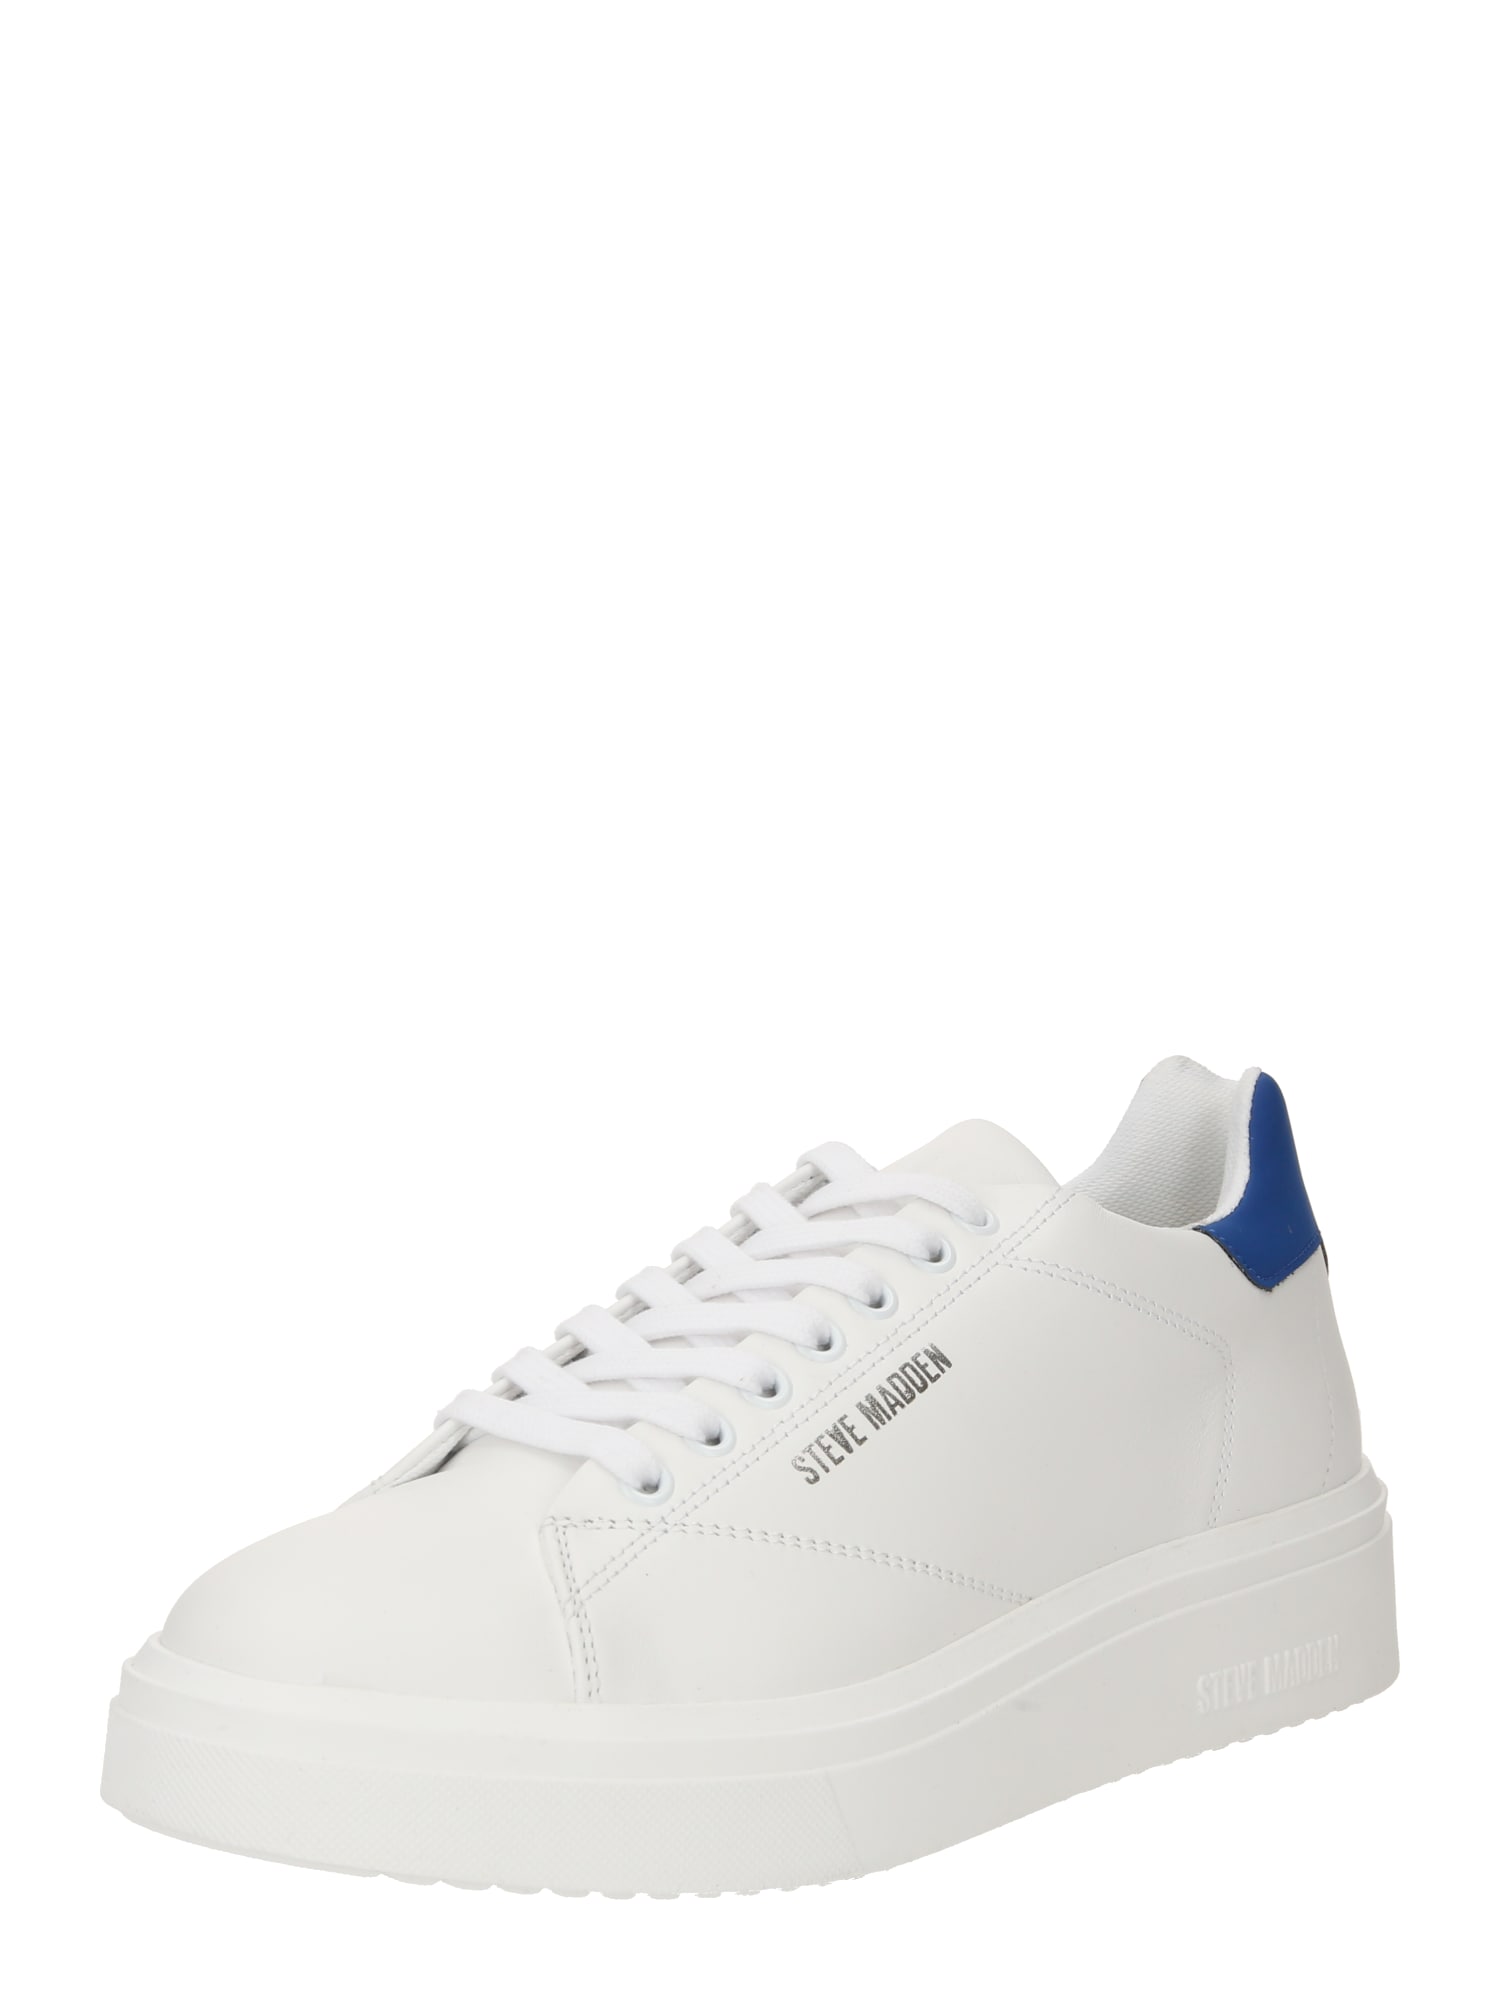 STEVE MADDEN Sneaker low 'FYNNER'  albastru / argintiu / alb